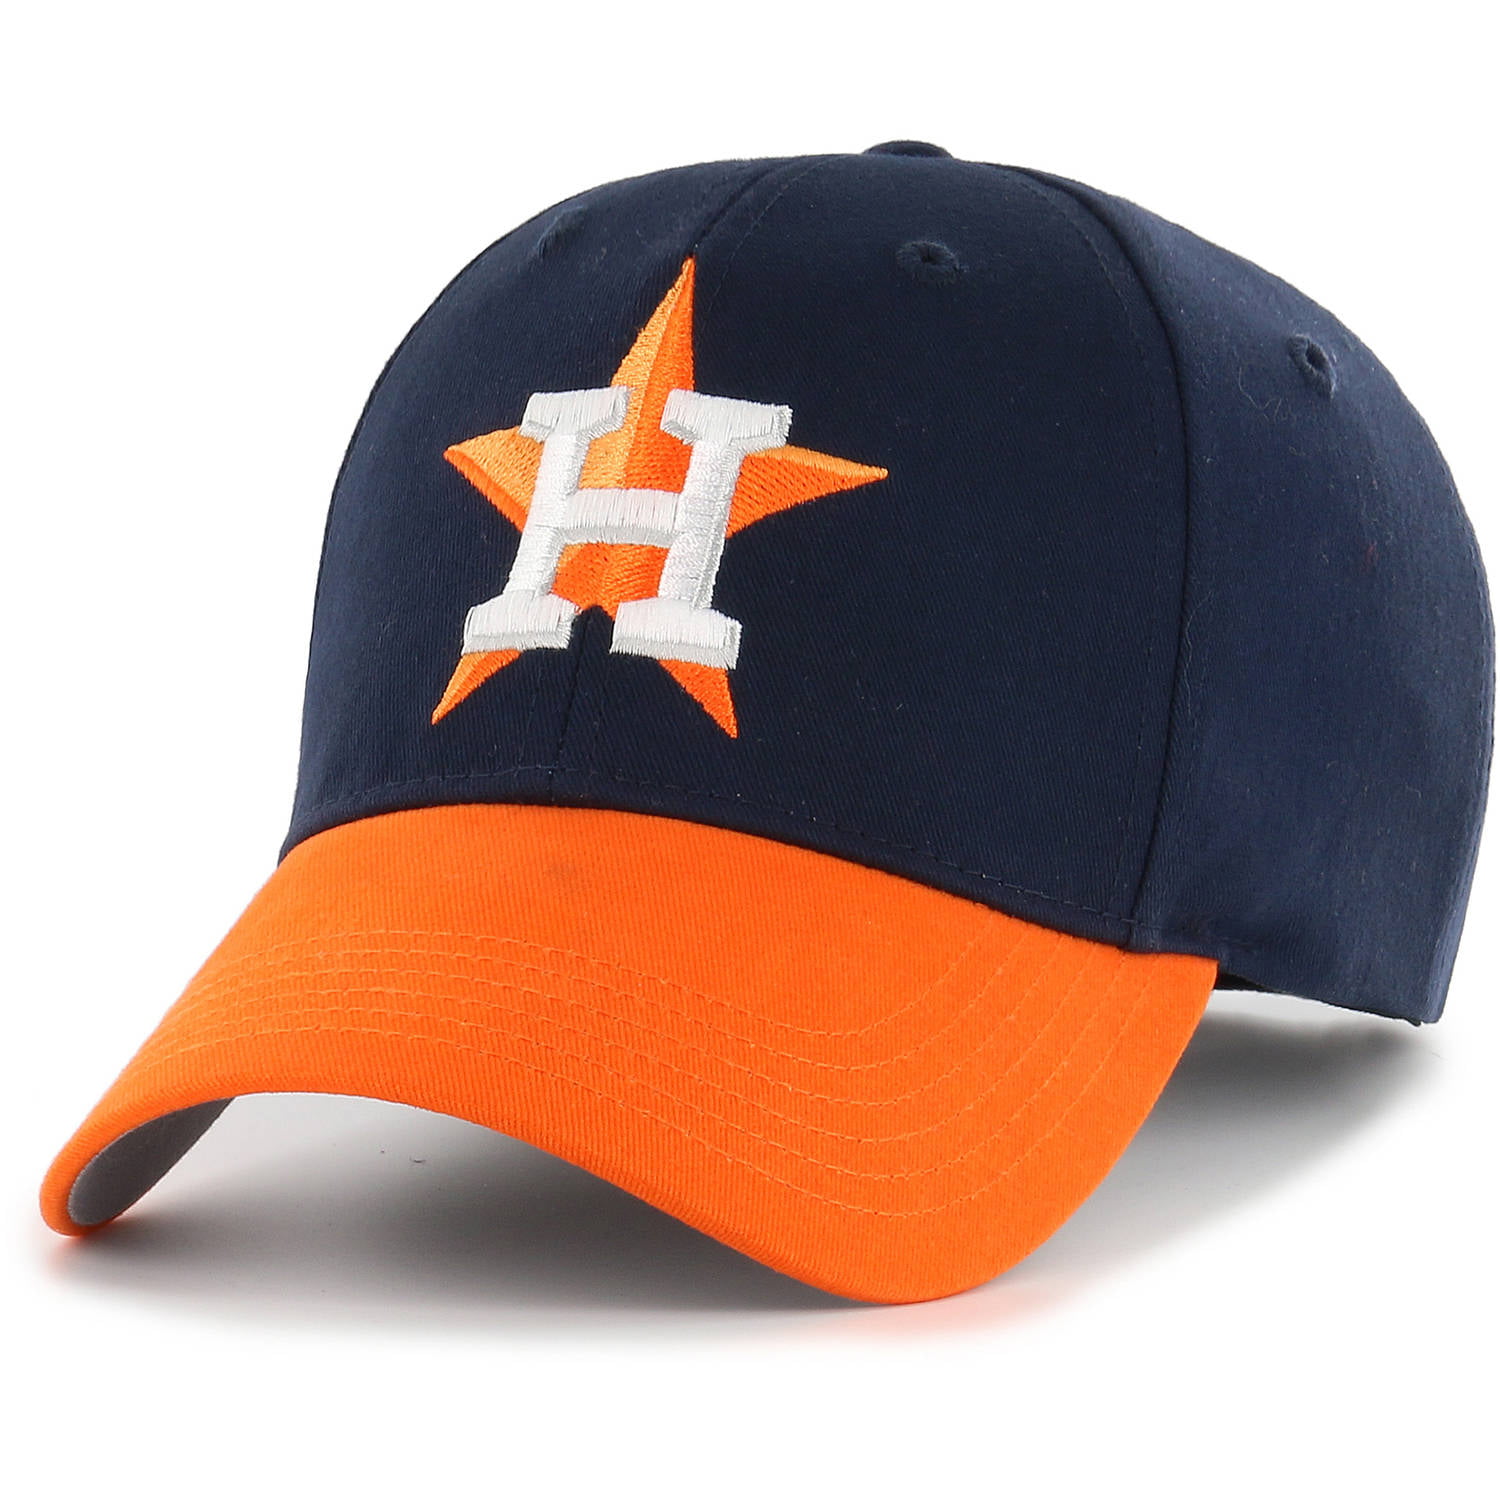 MLB Houston Astros Reverse Basic Adjustable Cap/Hat by Fan Favorite 